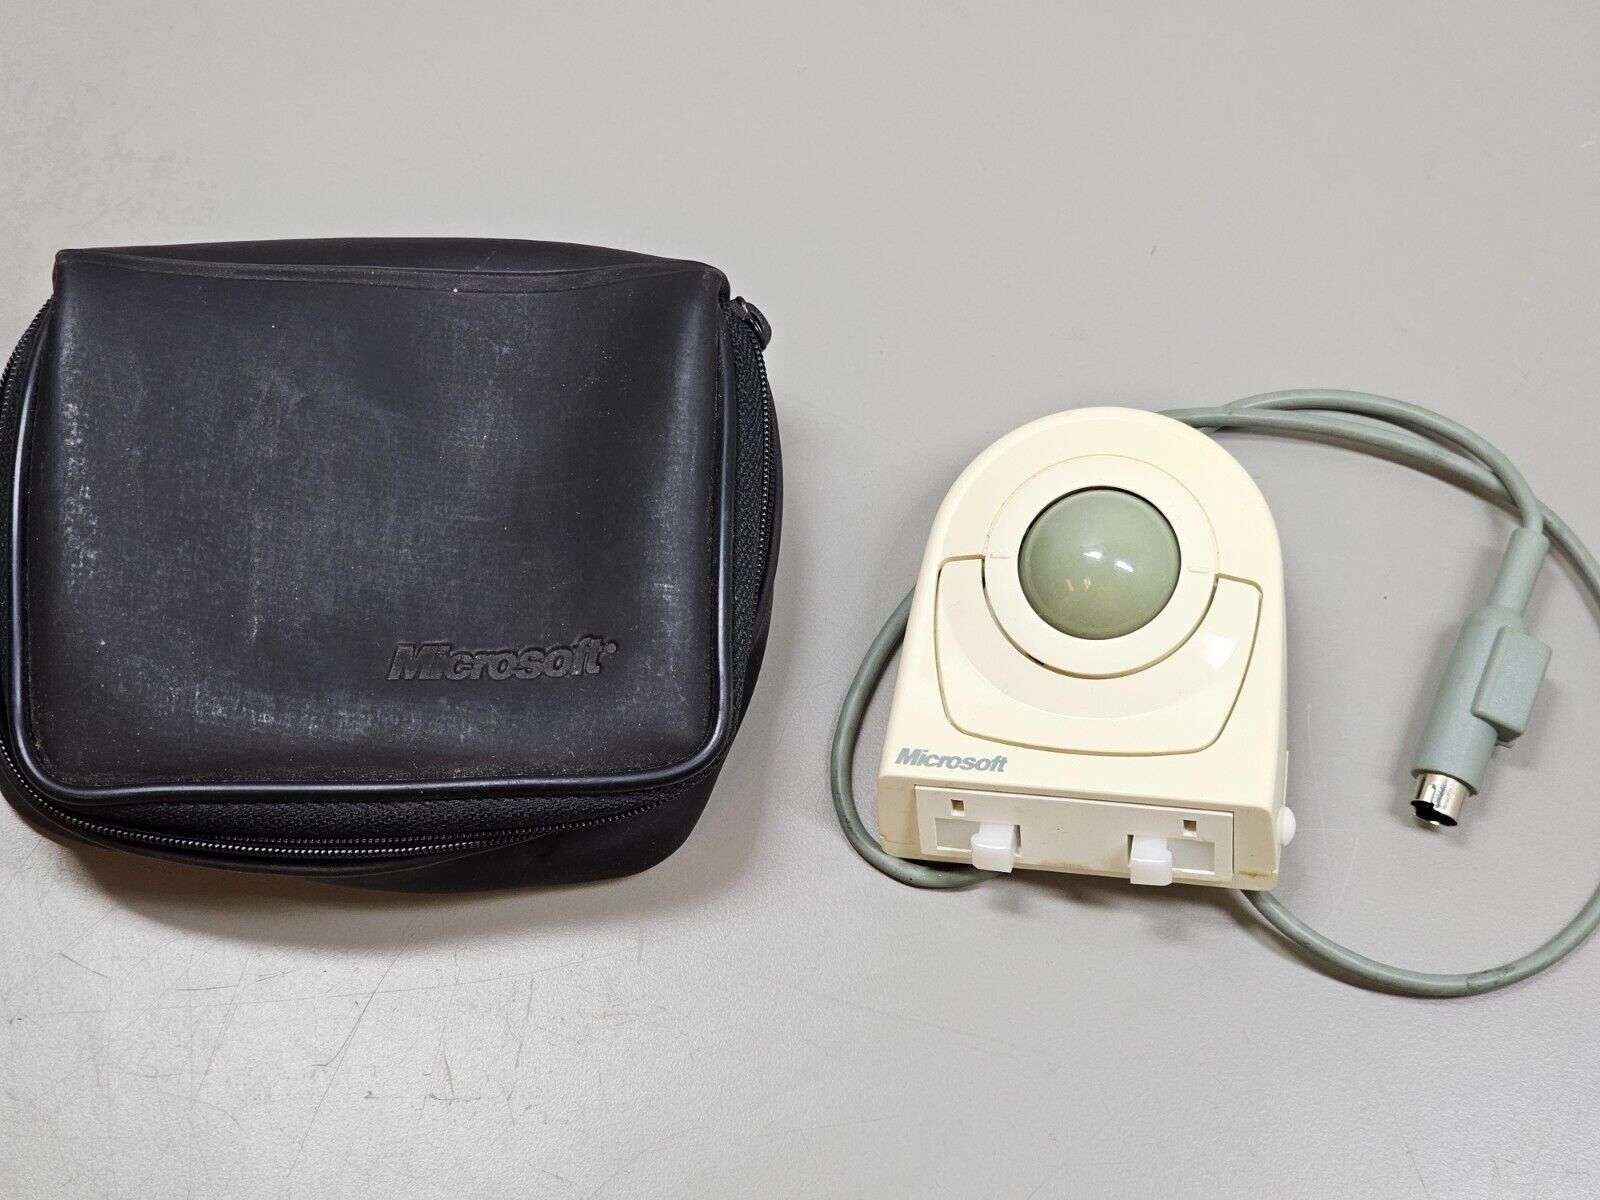 Vintage Microsoft BallPoint Mouse v2.0 Model 51010 w/ Original Pouch